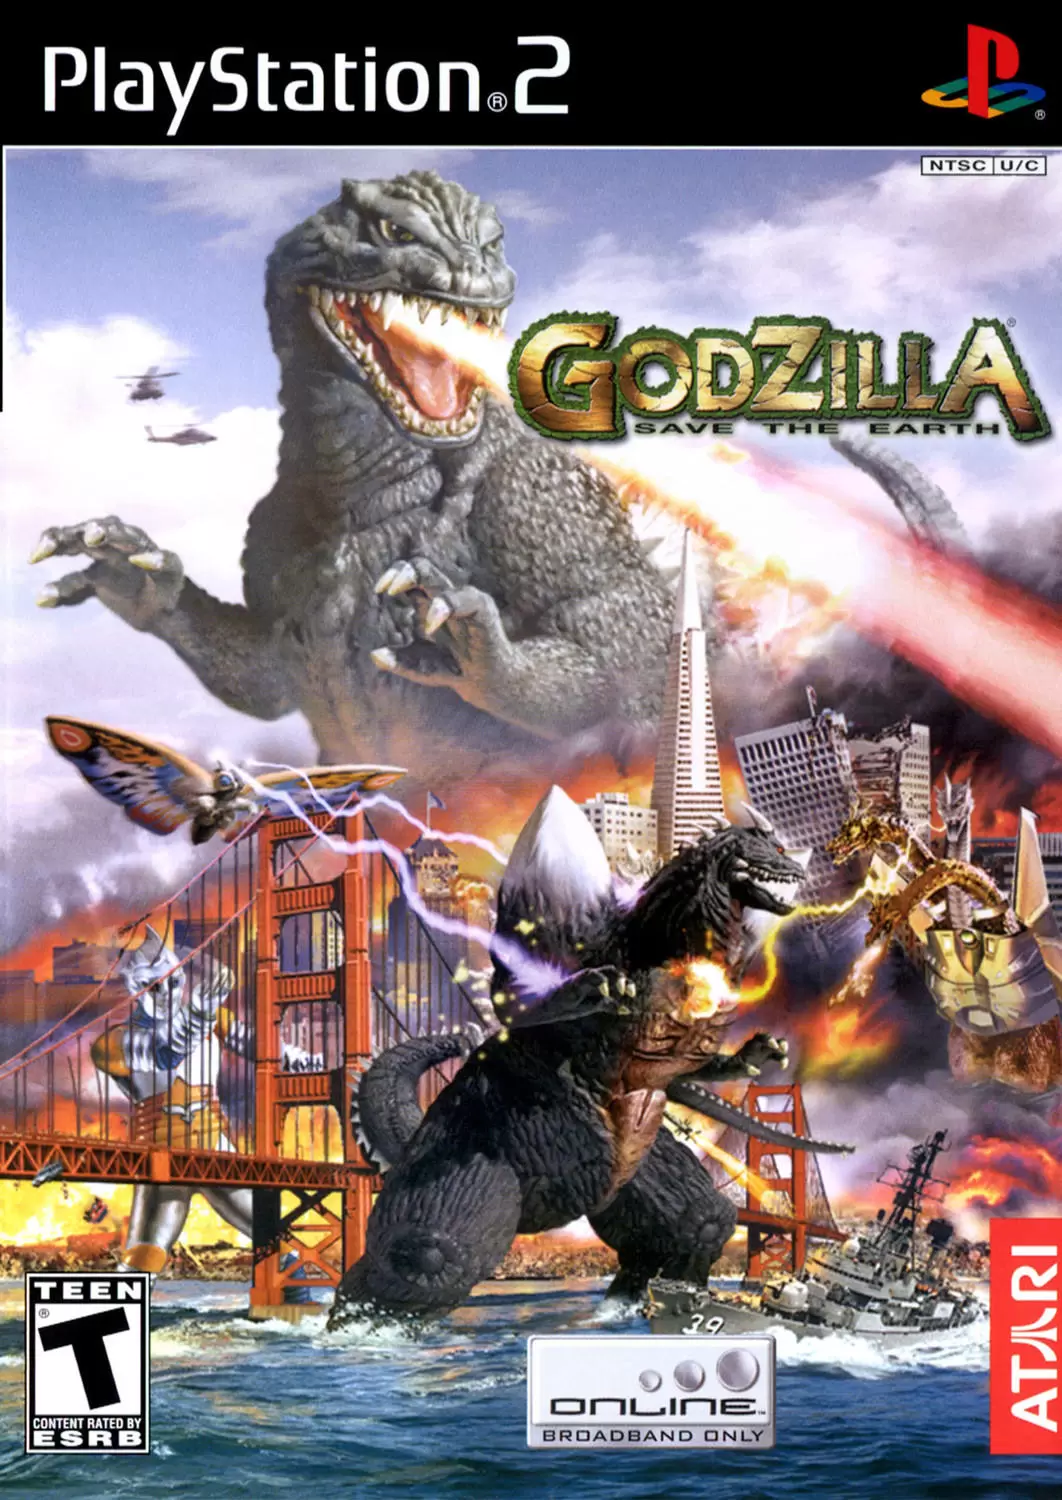 PS2 Games - Godzilla: Save the Earth